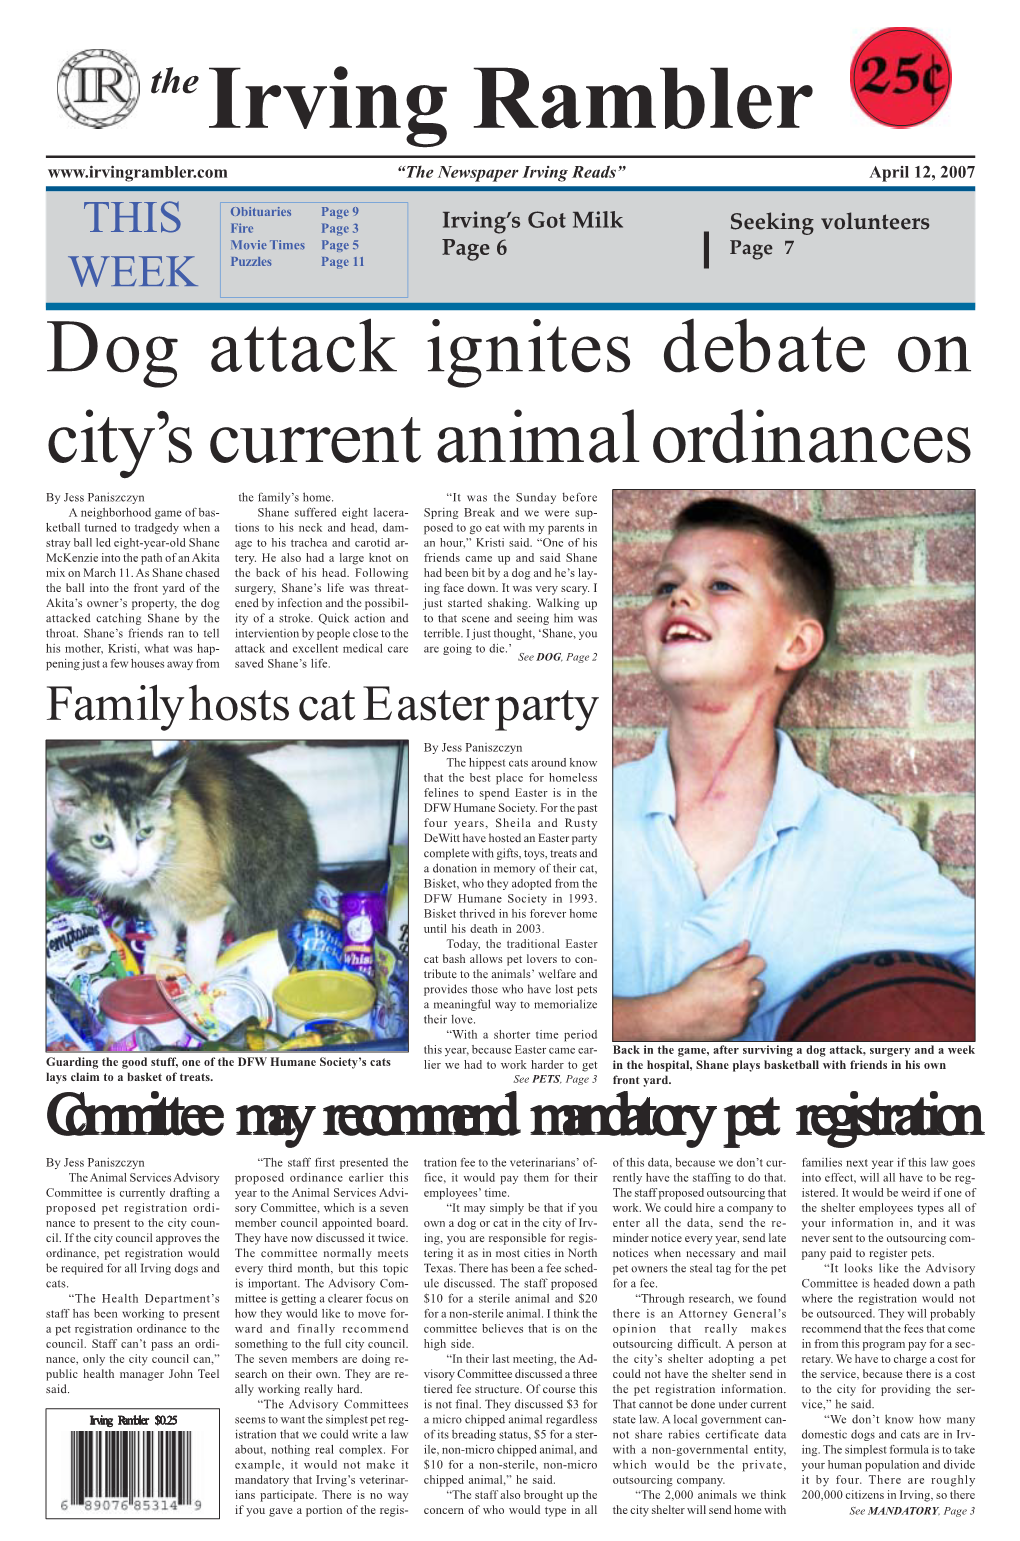 Dog Attack Ignites Debate on City's Current Animal Ordinances